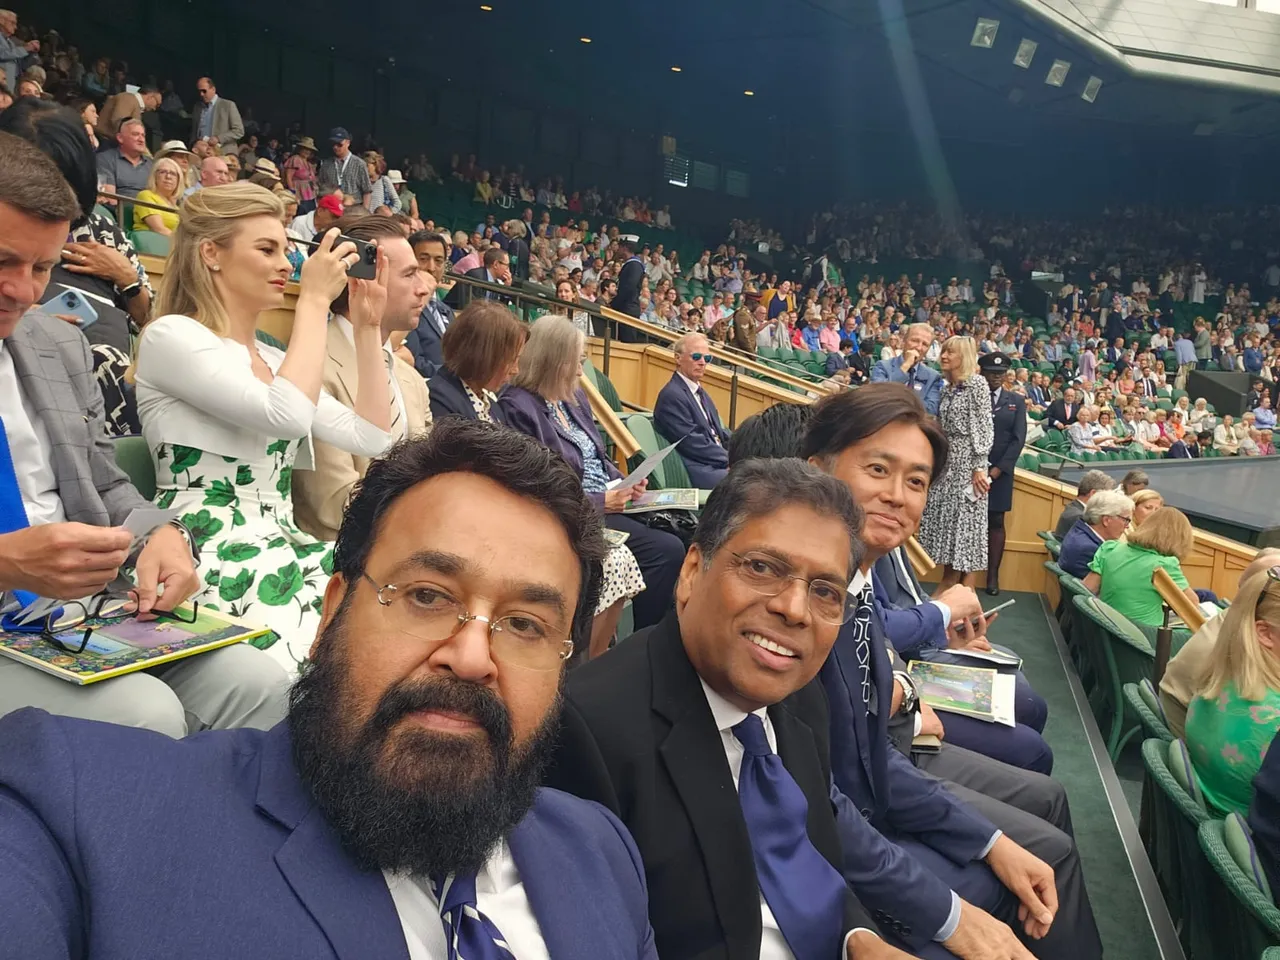 Malayalam actor Mohanlal watches Wimbledon match in London